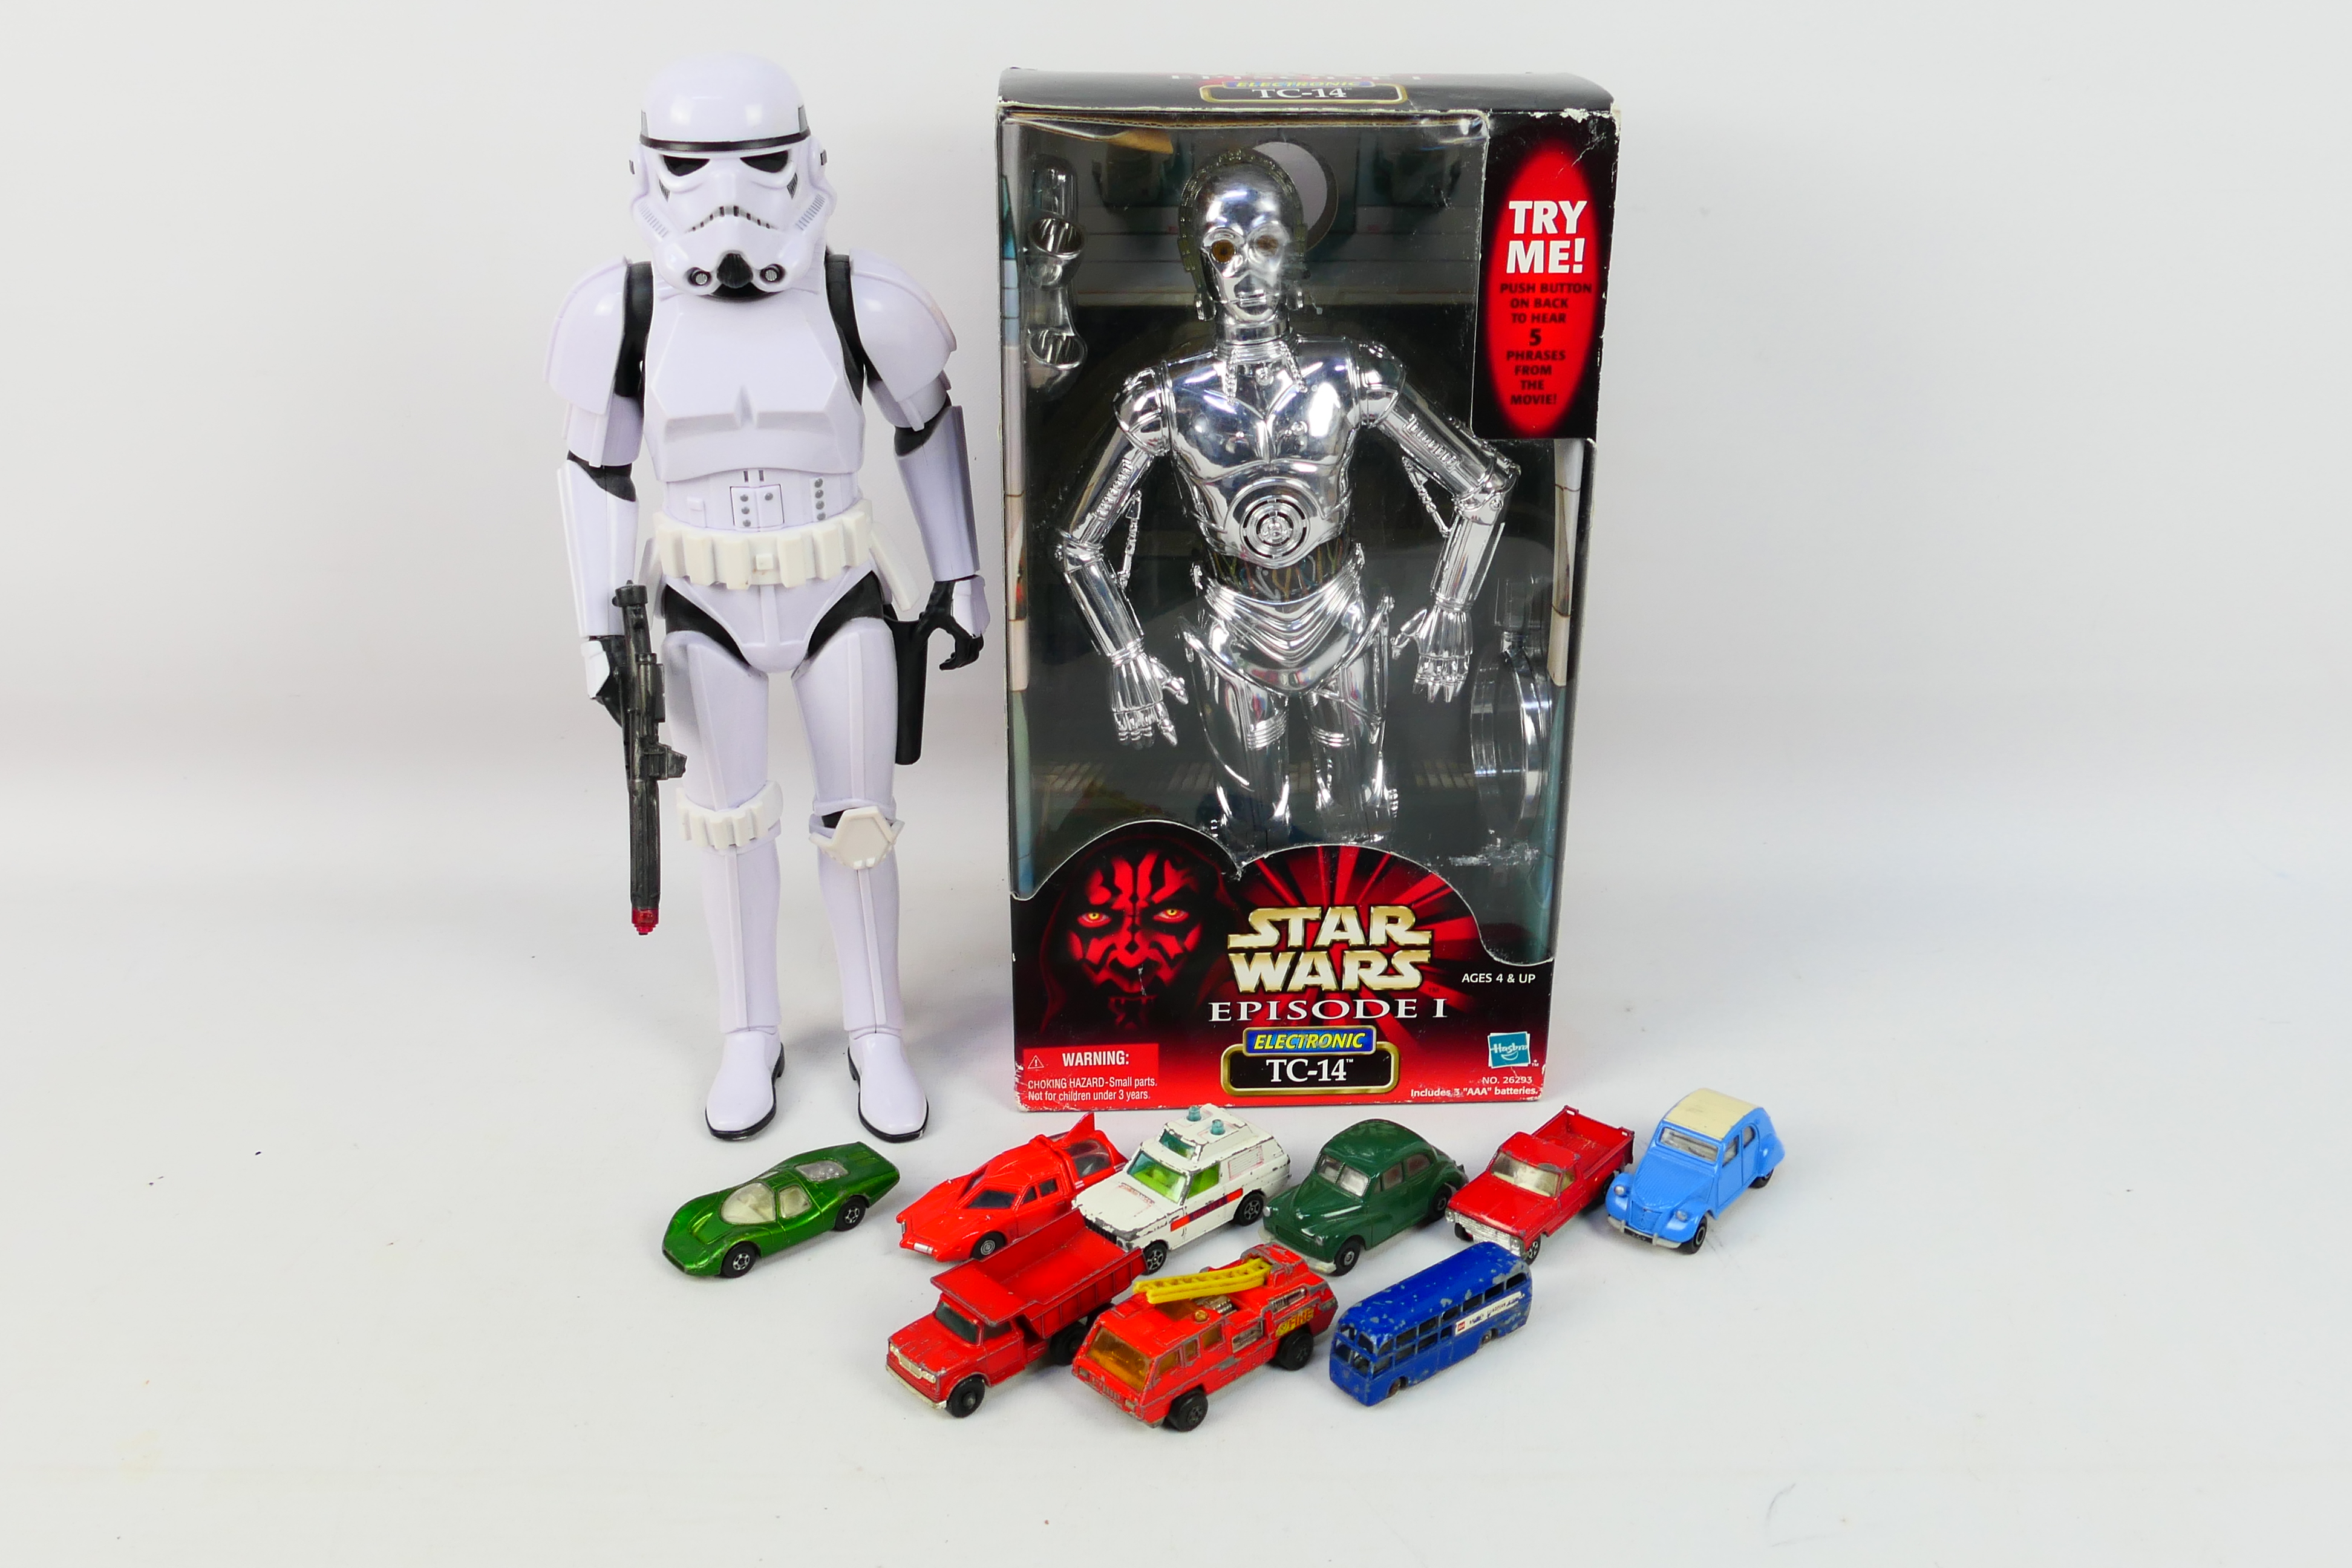 Hasbro - Star Wars - Corgi - Matchbox - A boxed 12" electronic TC-14 Silver Protocol Droid and an